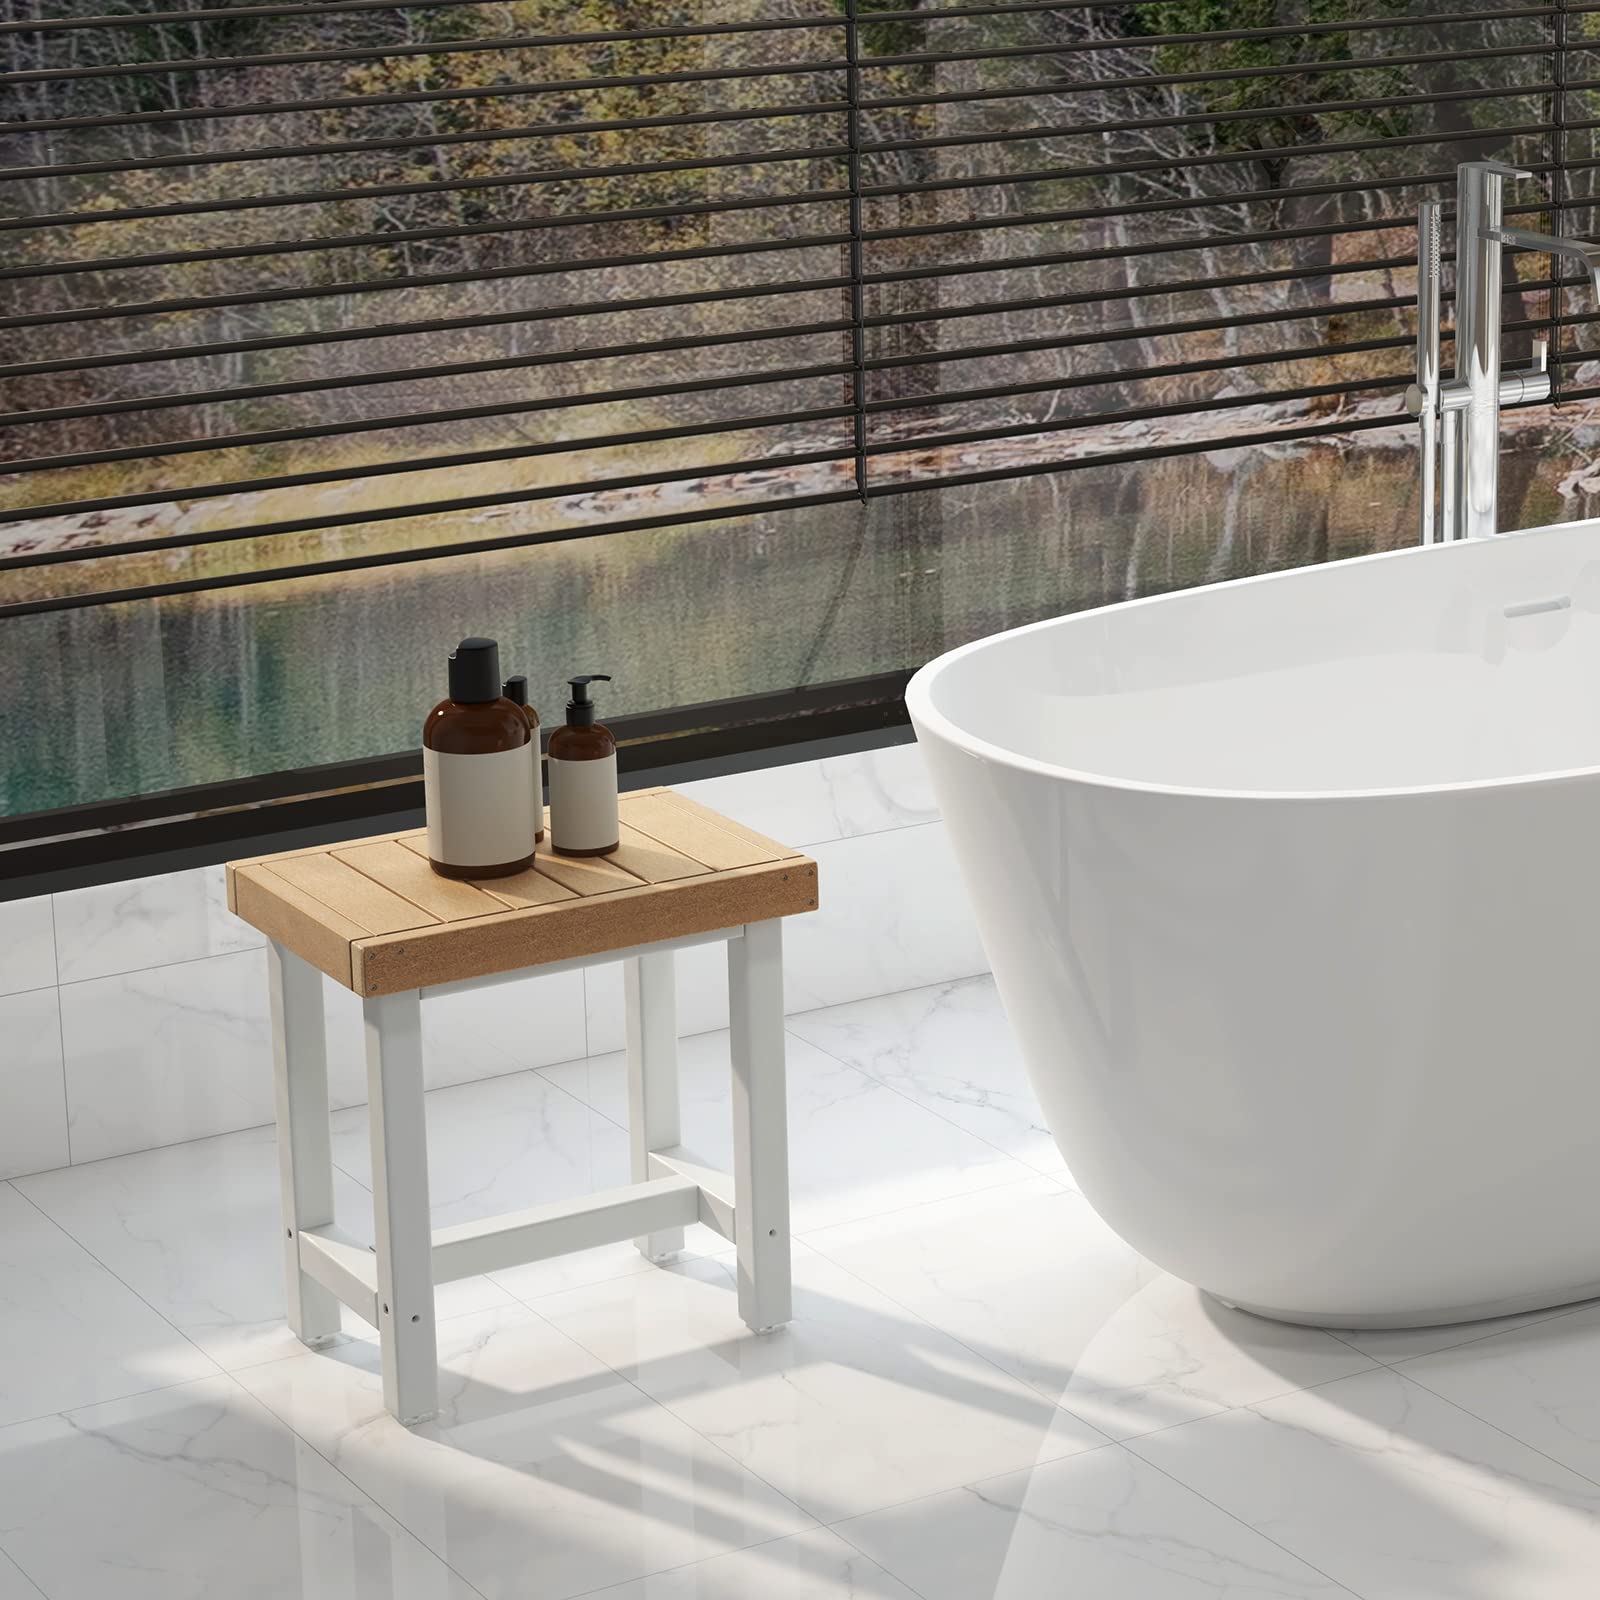 Giantex Shower Bench Waterproof HDPE - Shower Stool, Plastic Spa Bath Step Foot Rest for Bathroom